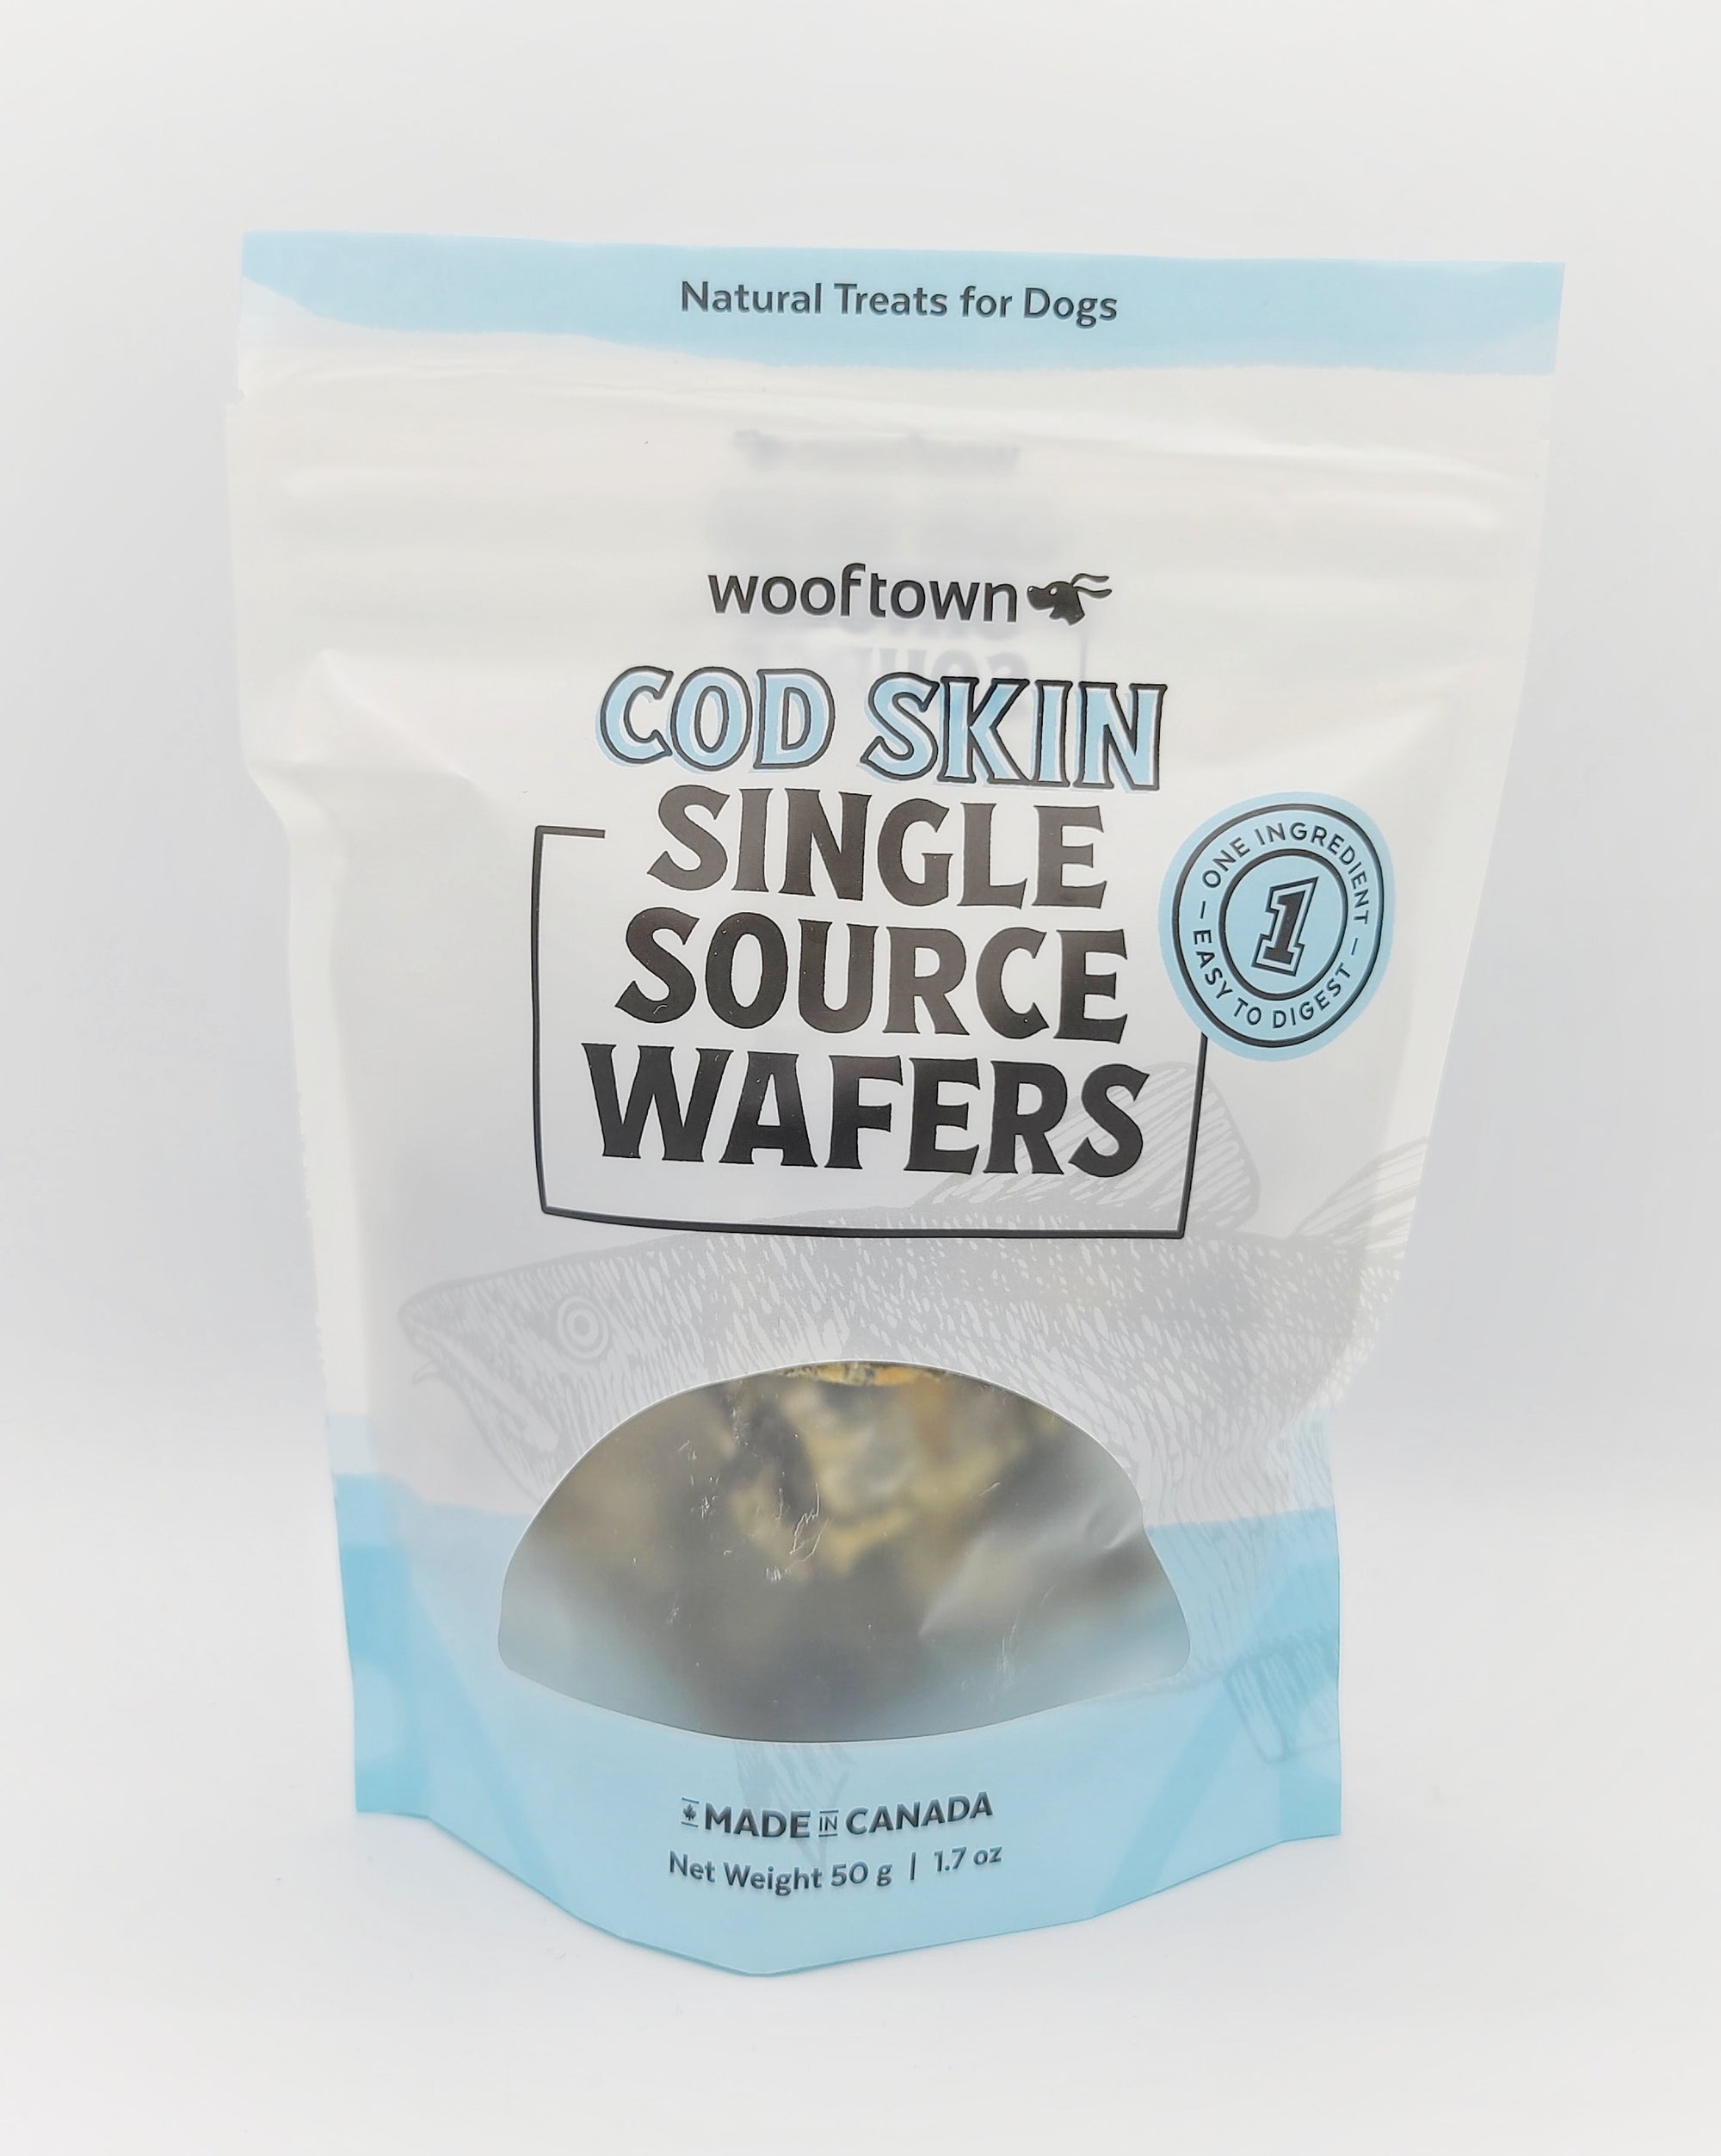 Wooftown HomeCooked Single Source Air Dried Cod Skin Dog Treats